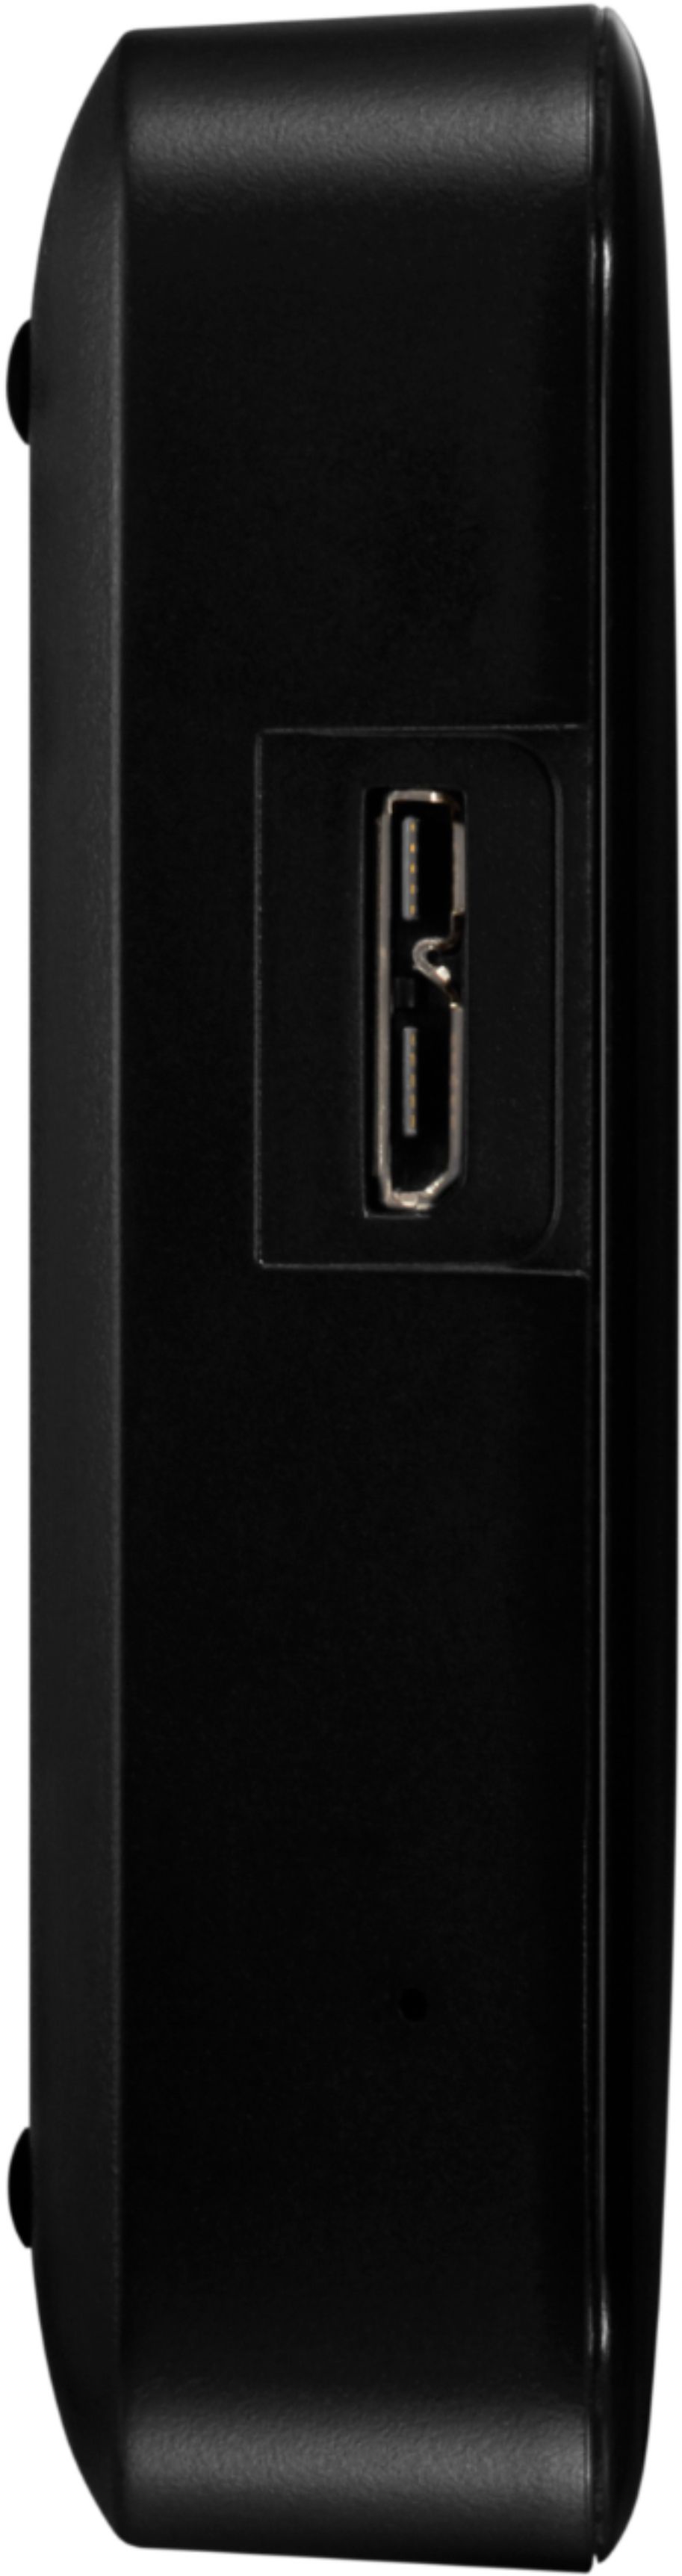 WD Easystore 4TB External USB 3.0 Portable Hard Drive Black 